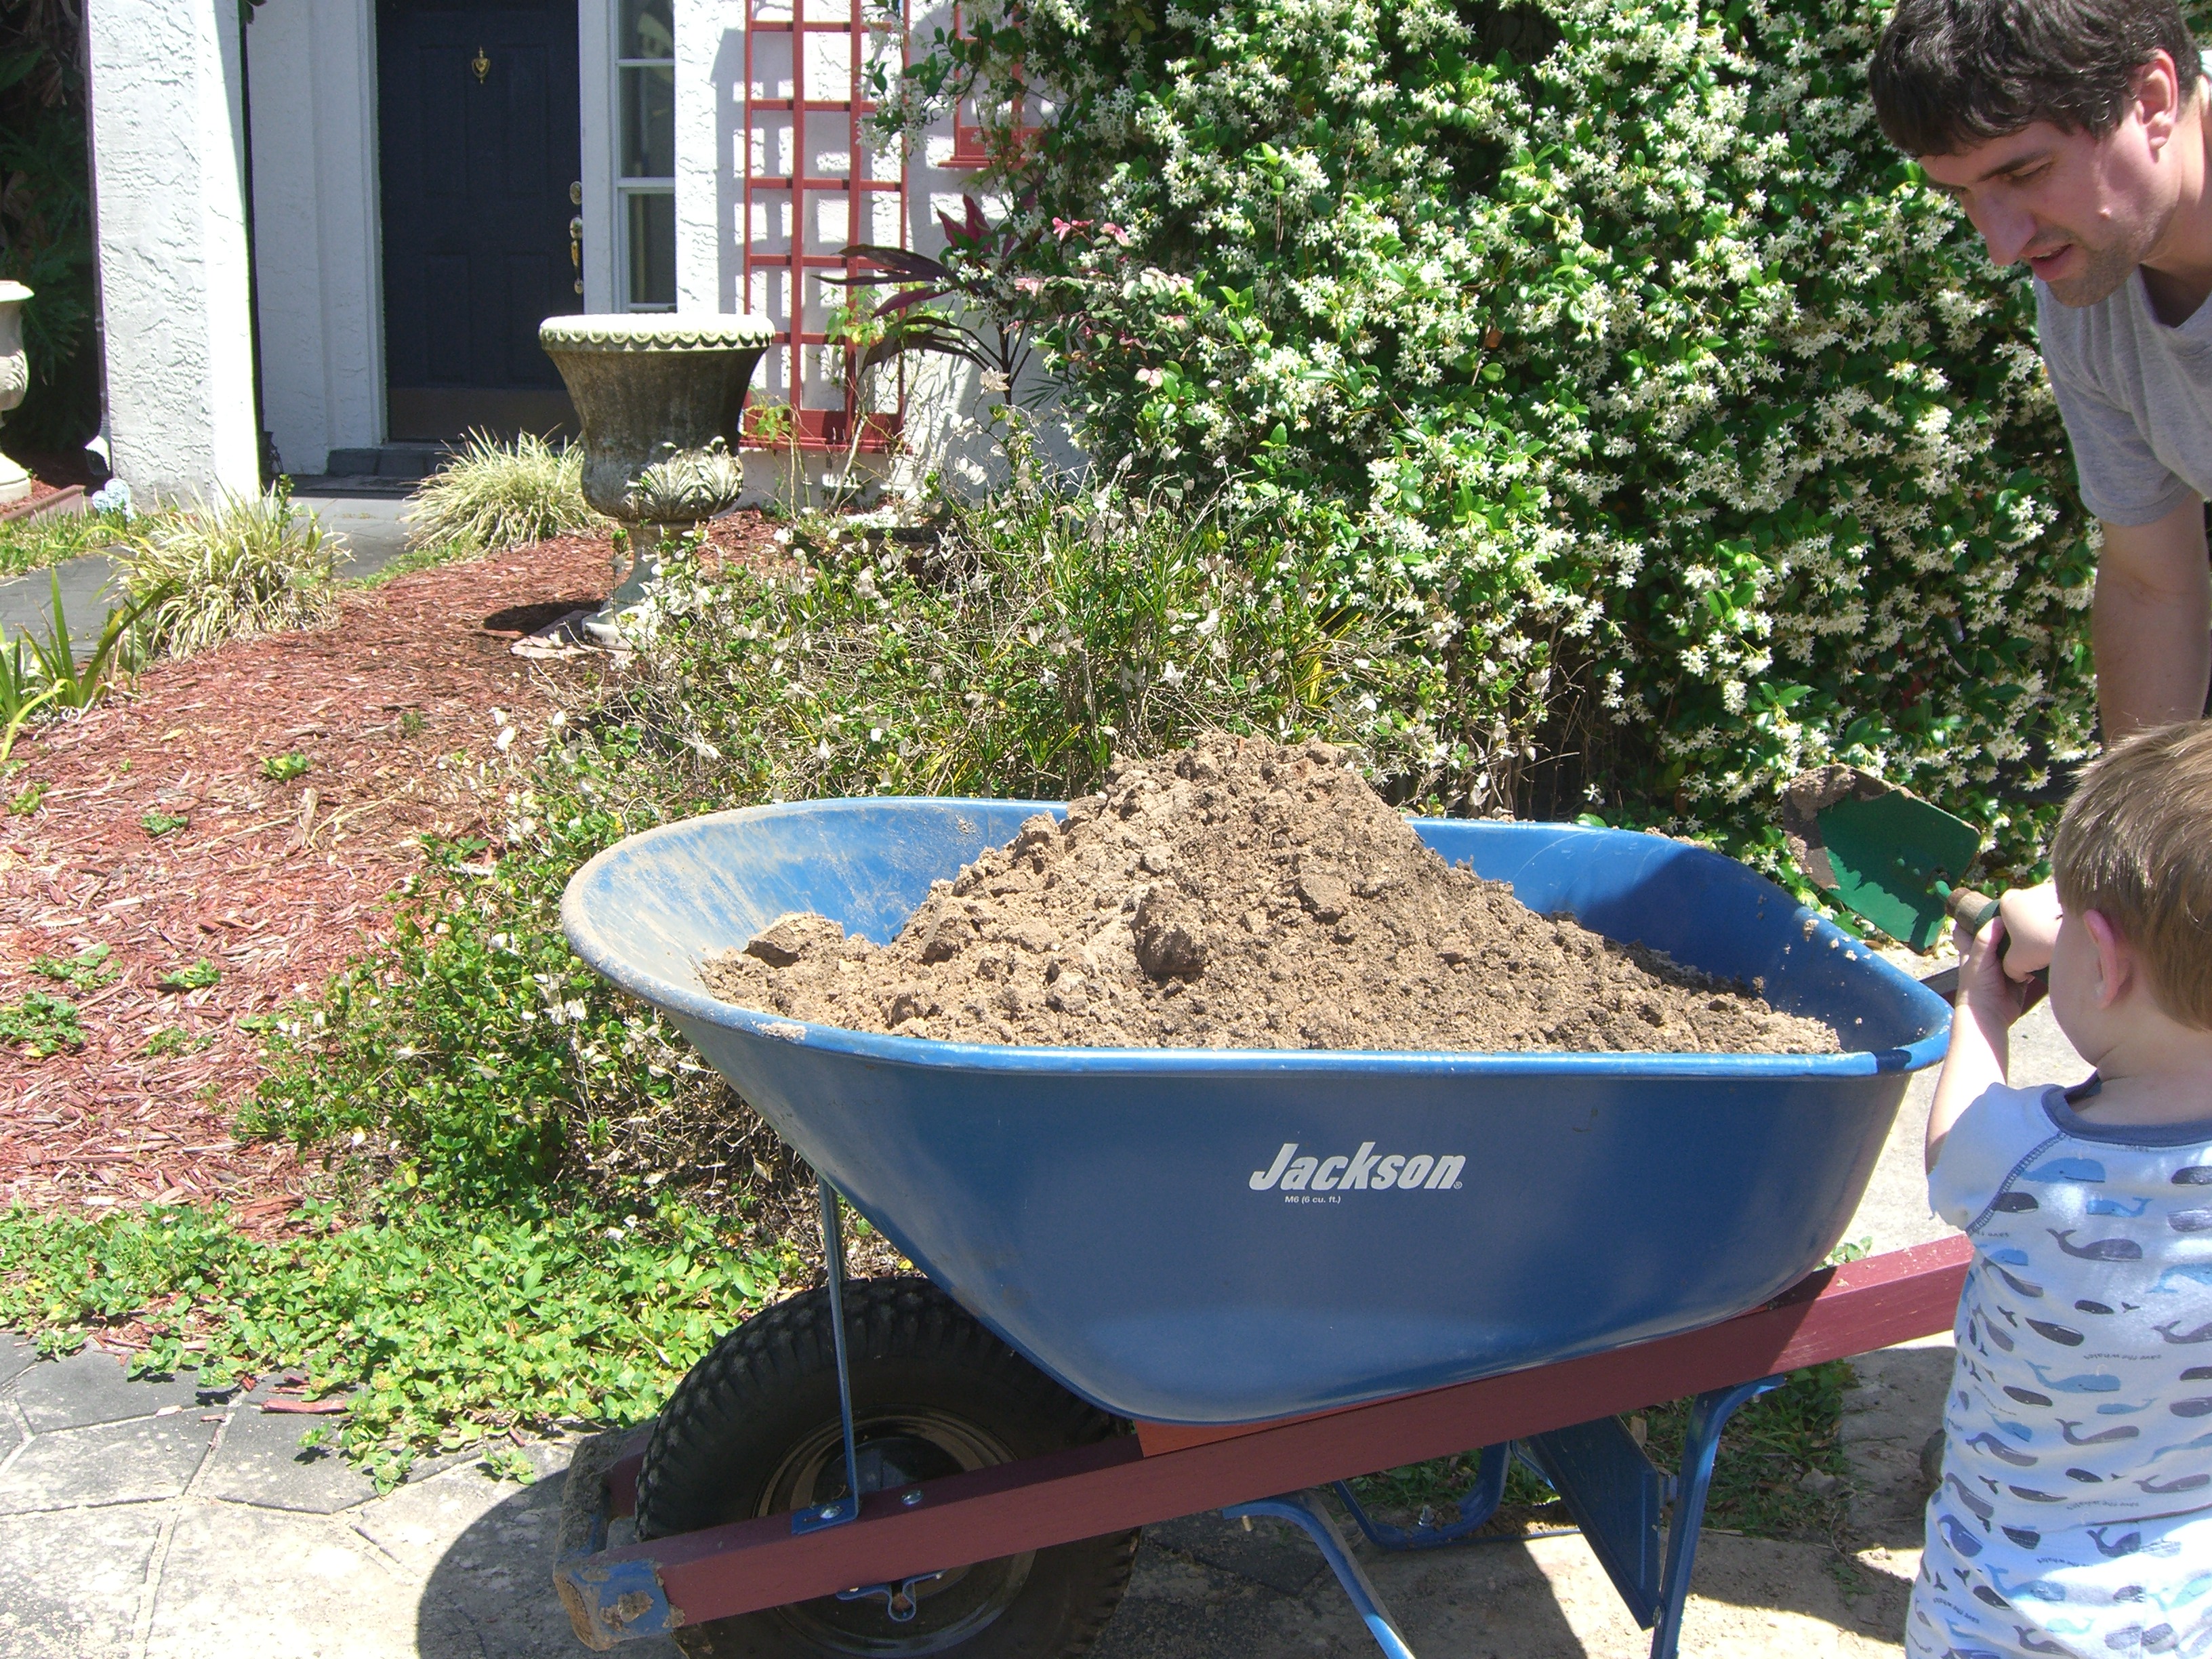 My method of transferring all of that soil